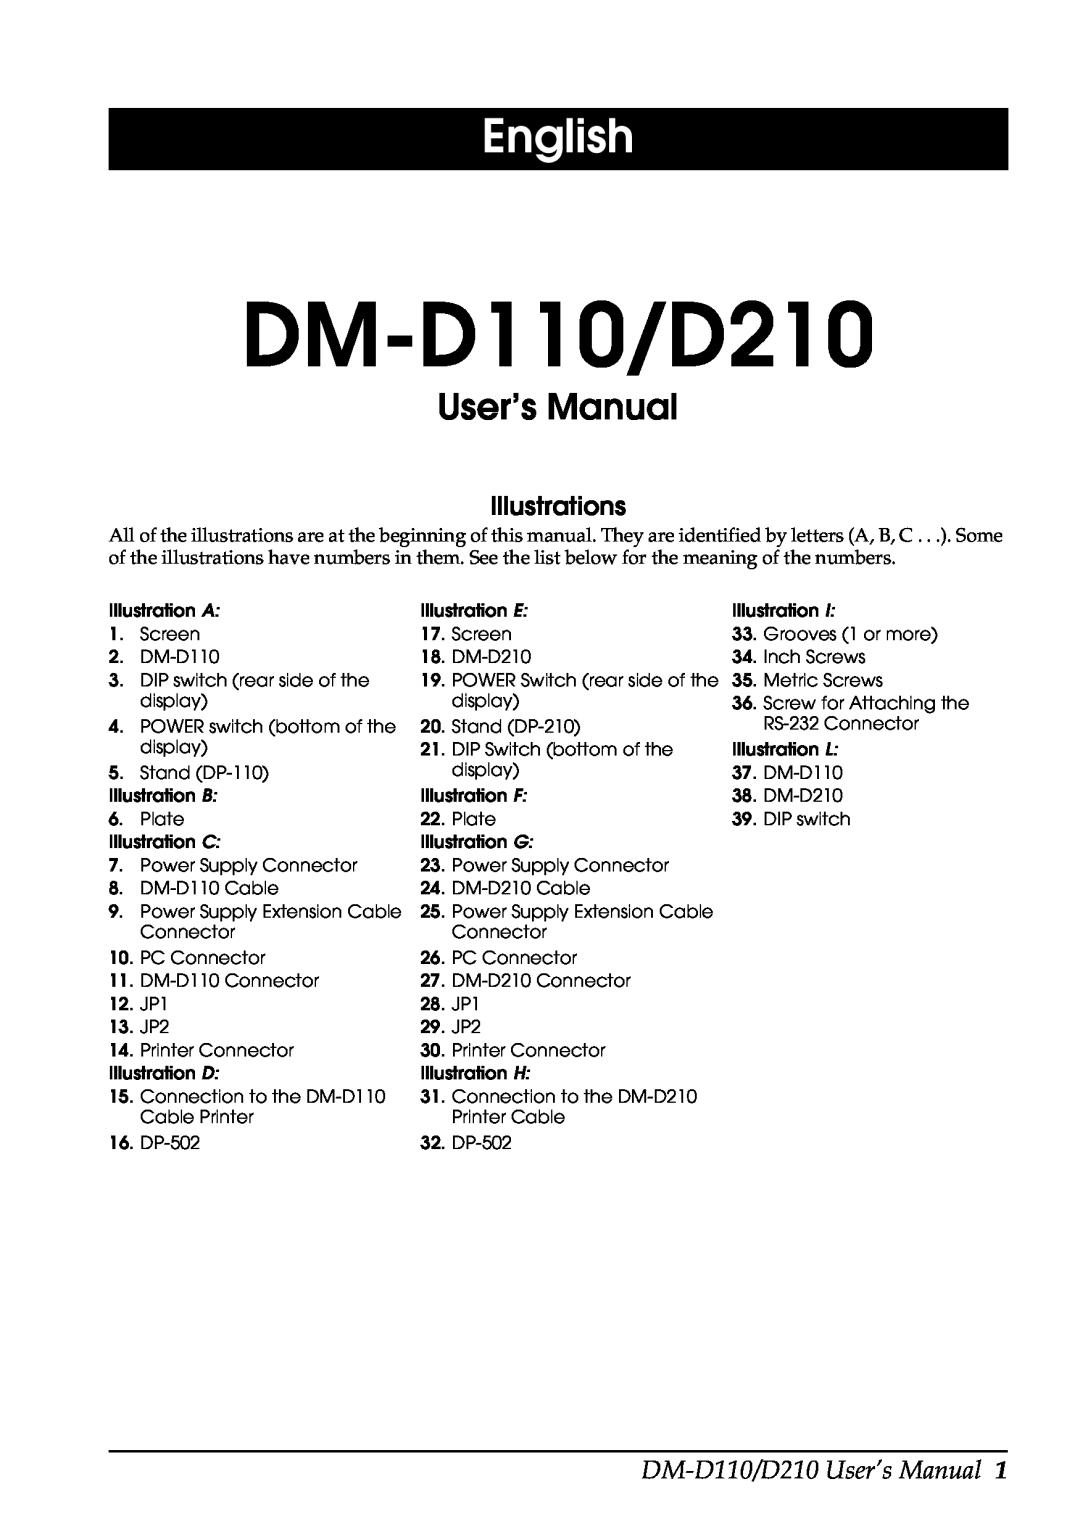 Epson user manual DM-D110/D210 User’s Manual, English, Illustrations 